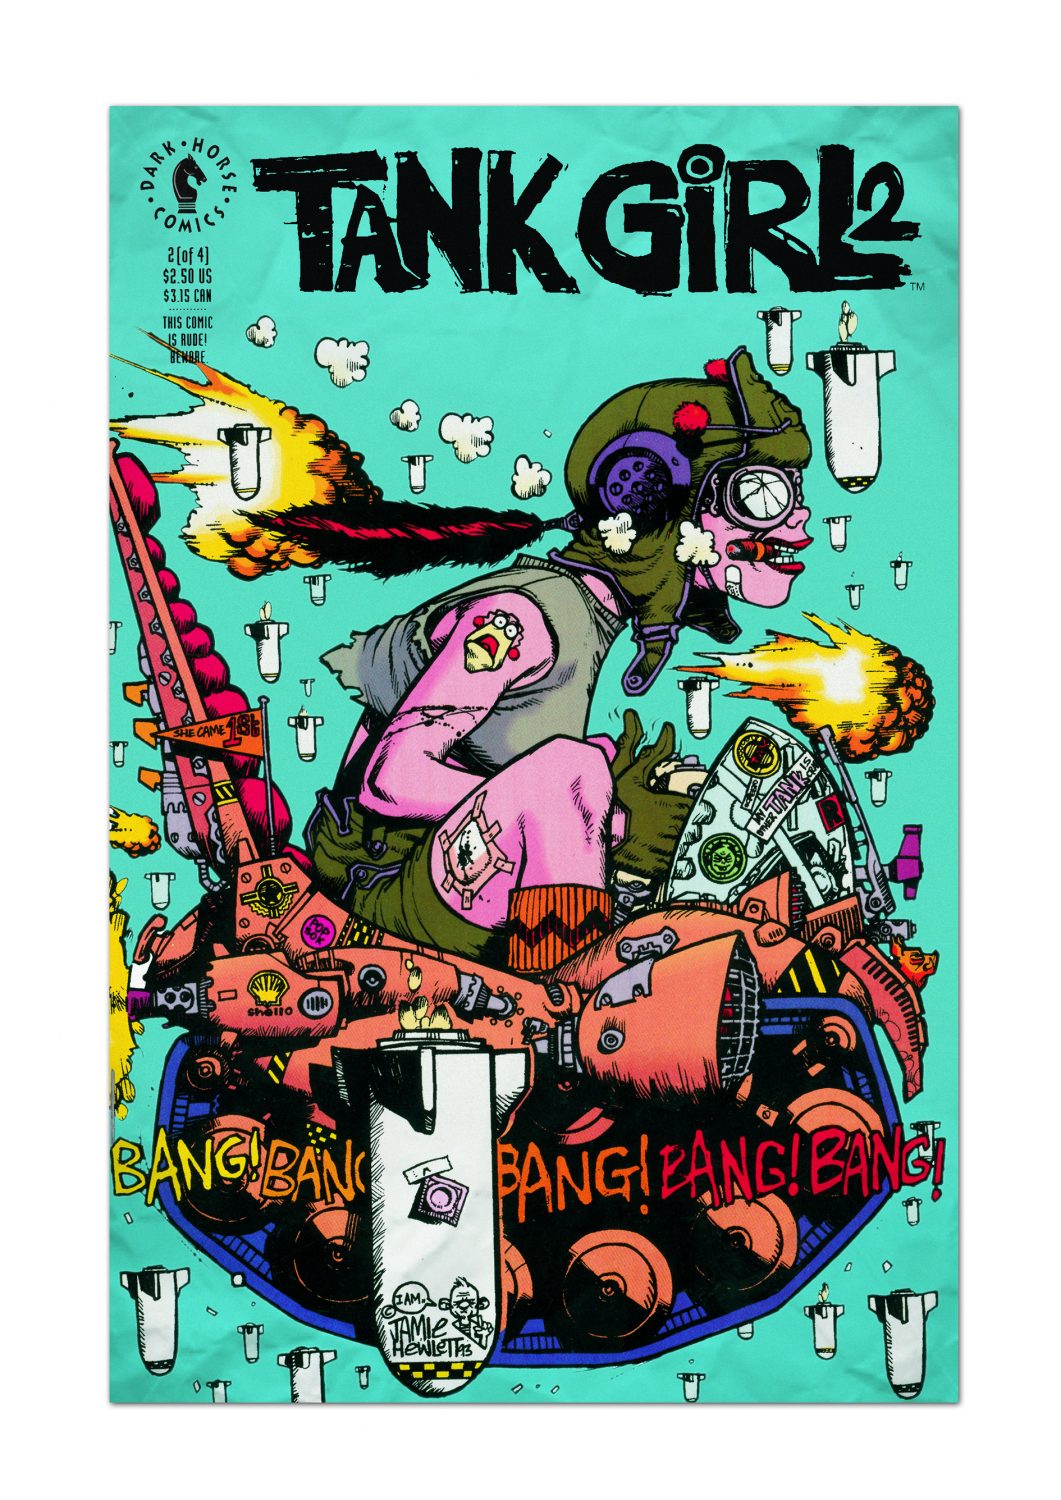 Tank Girl #02